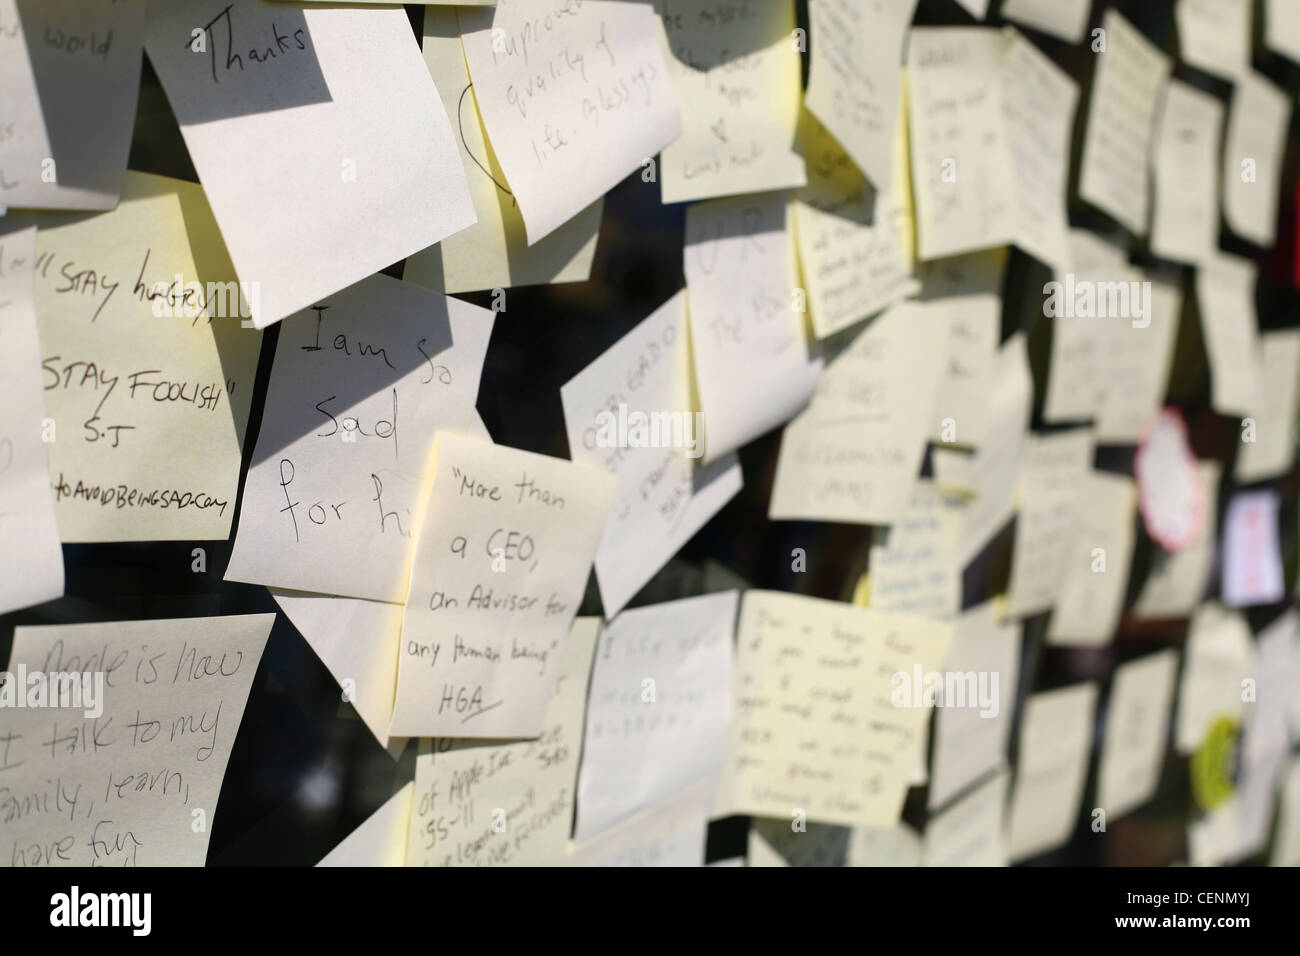 Notas Post-it con mensajes en la ventana de la Apple Store de la Calle 14 sobre la muerte de Steve Jobs Foto de stock